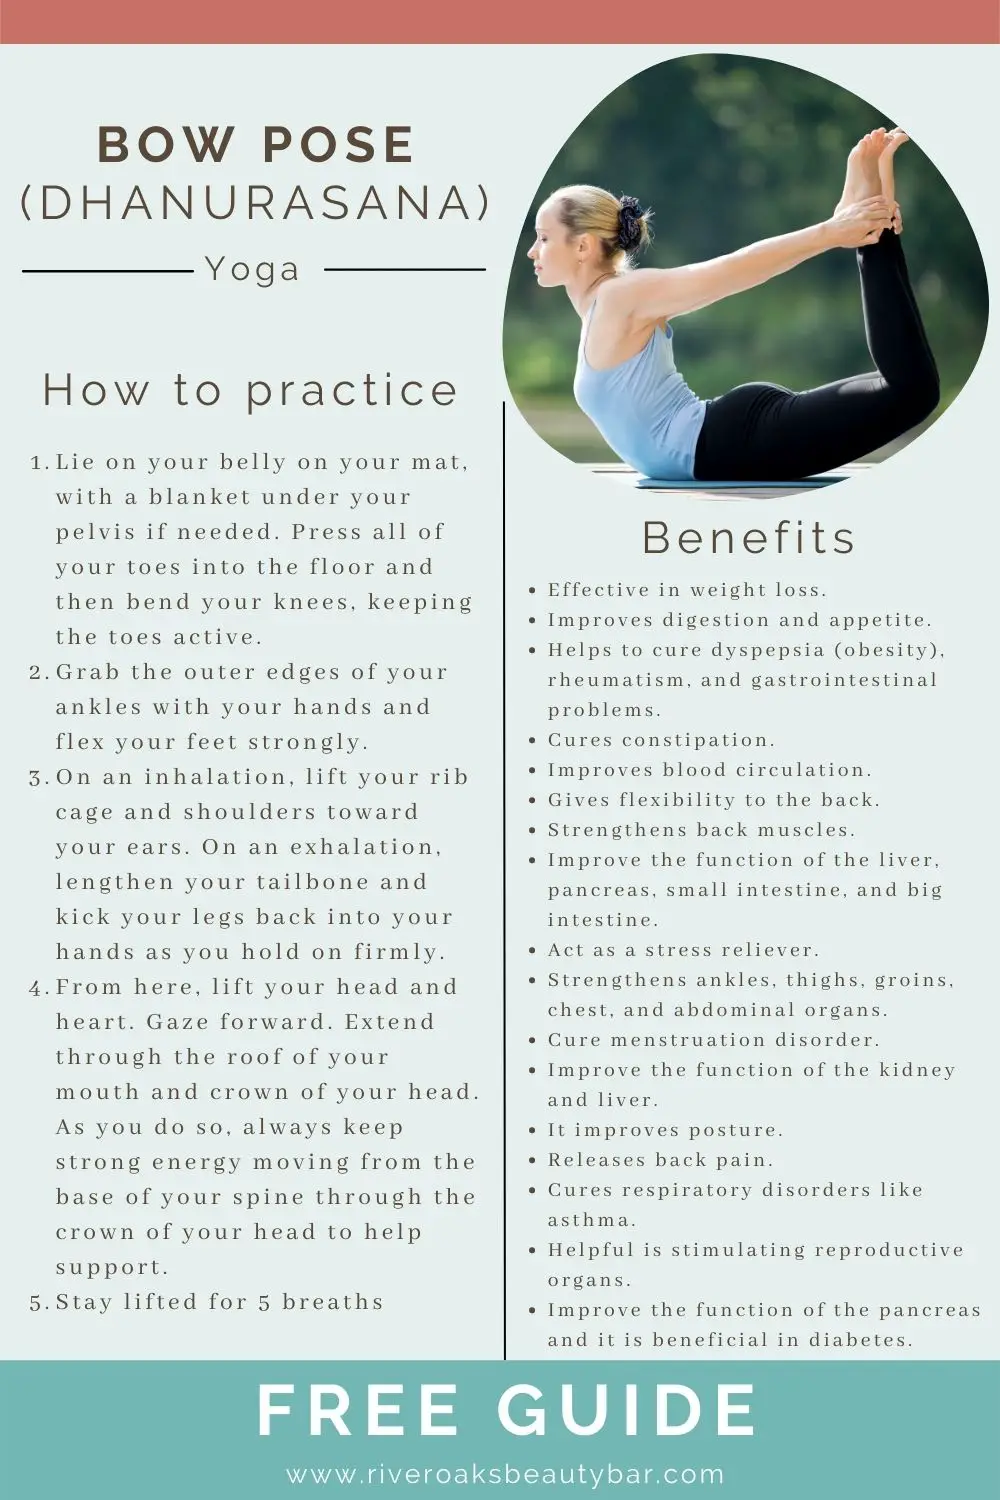 How to Practice Bow Pose Yoga (Dhanurasana)